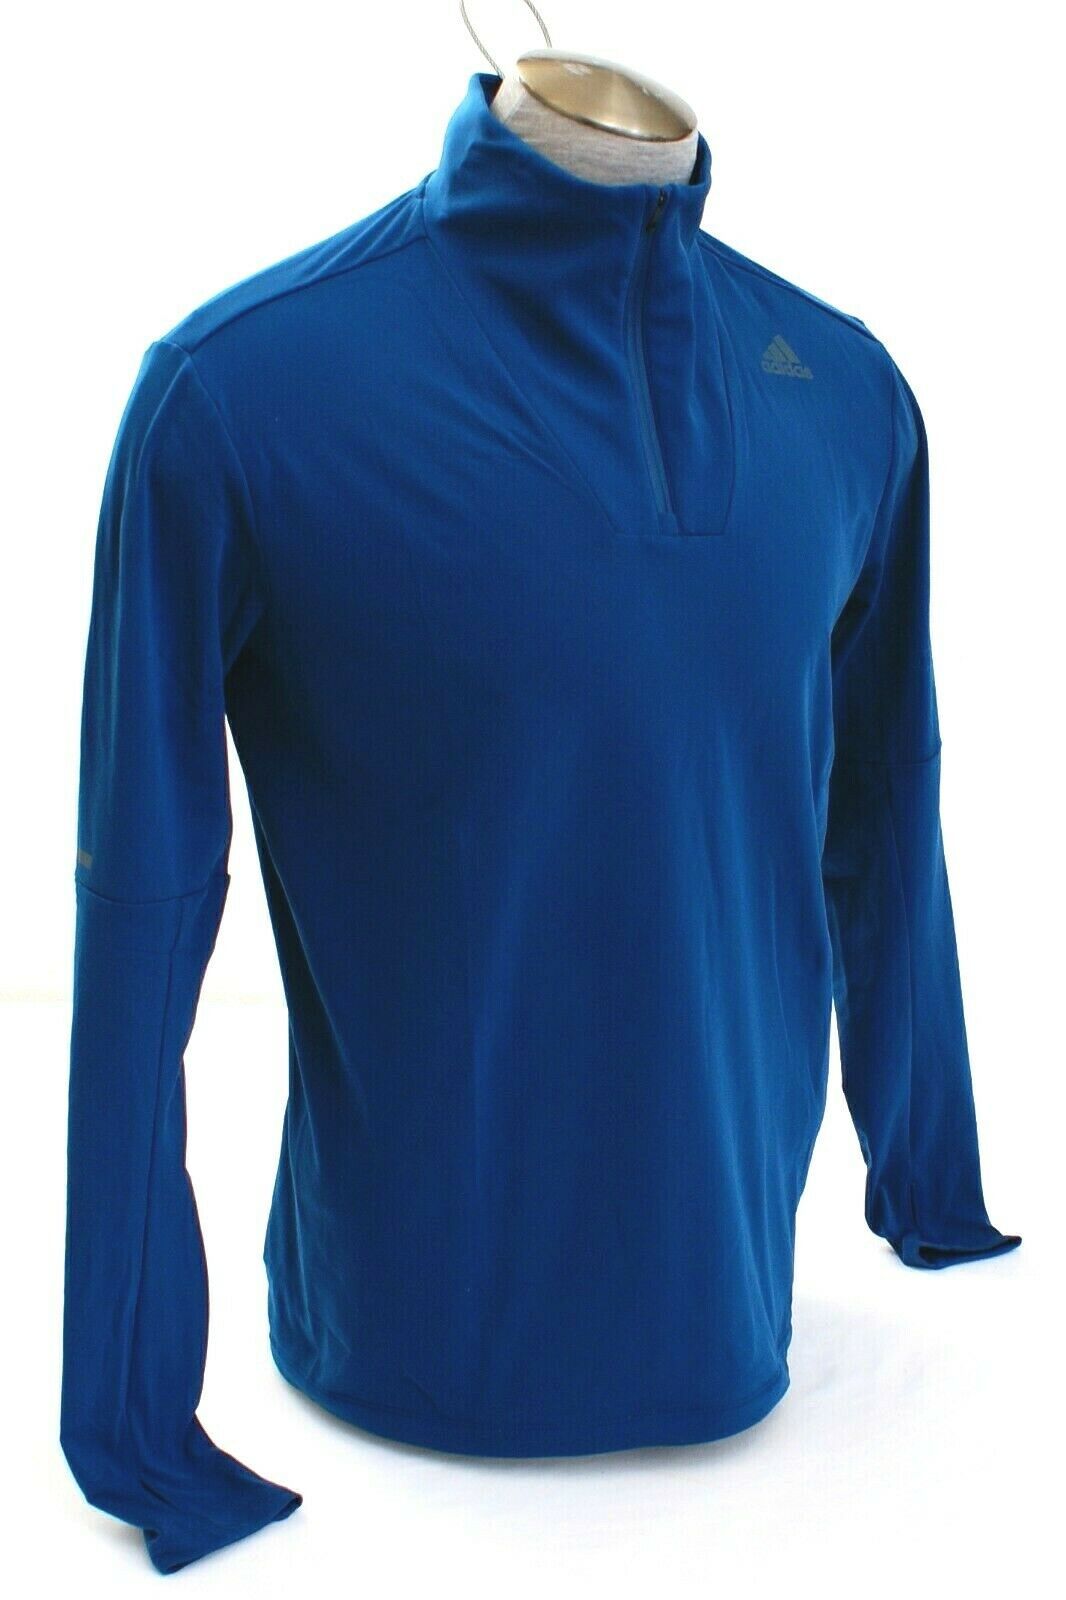 Adidas ClimaLite Blue 1/2 Zip Long Sleeve Running Shirt Men's NWT